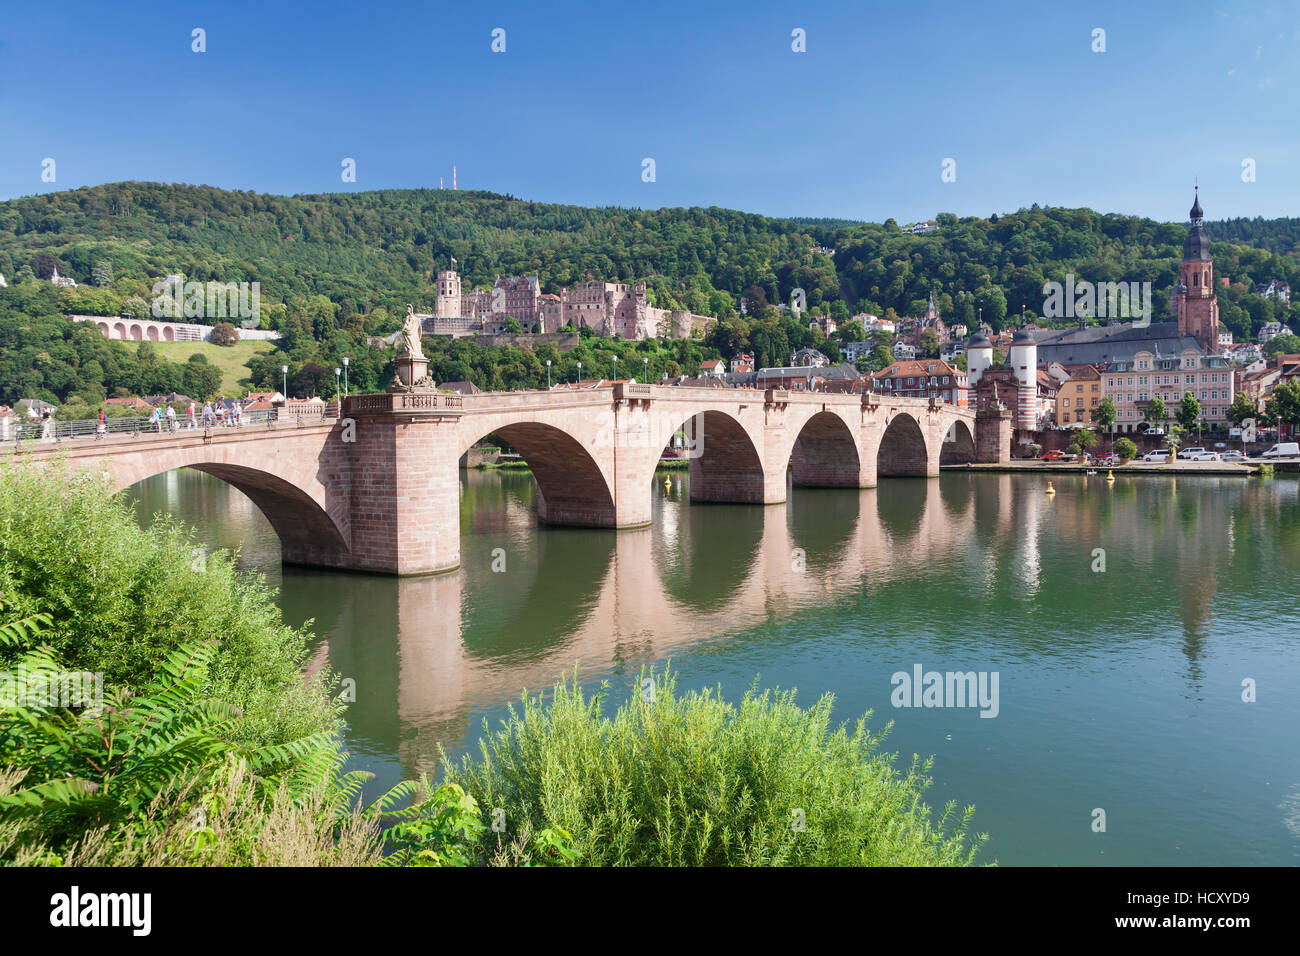 Old town with Karl-Theodor-Bridge, Heilig Geist Church and Castle, Neckar River, Heidelberg, Baden-Wurttemberg, Germany Stock Photo